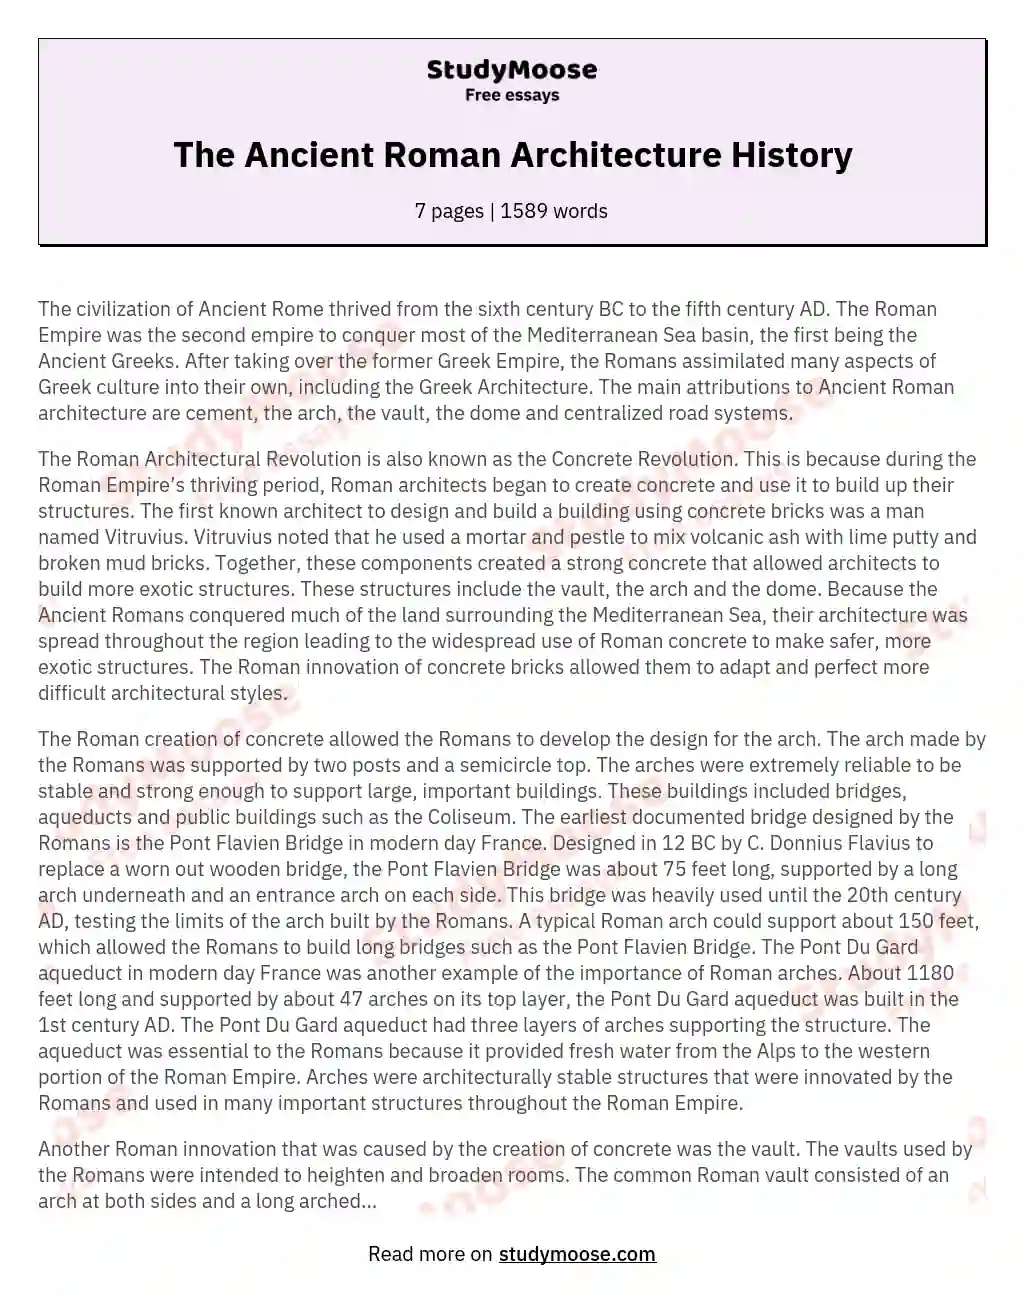 The Ancient Roman Architecture History essay